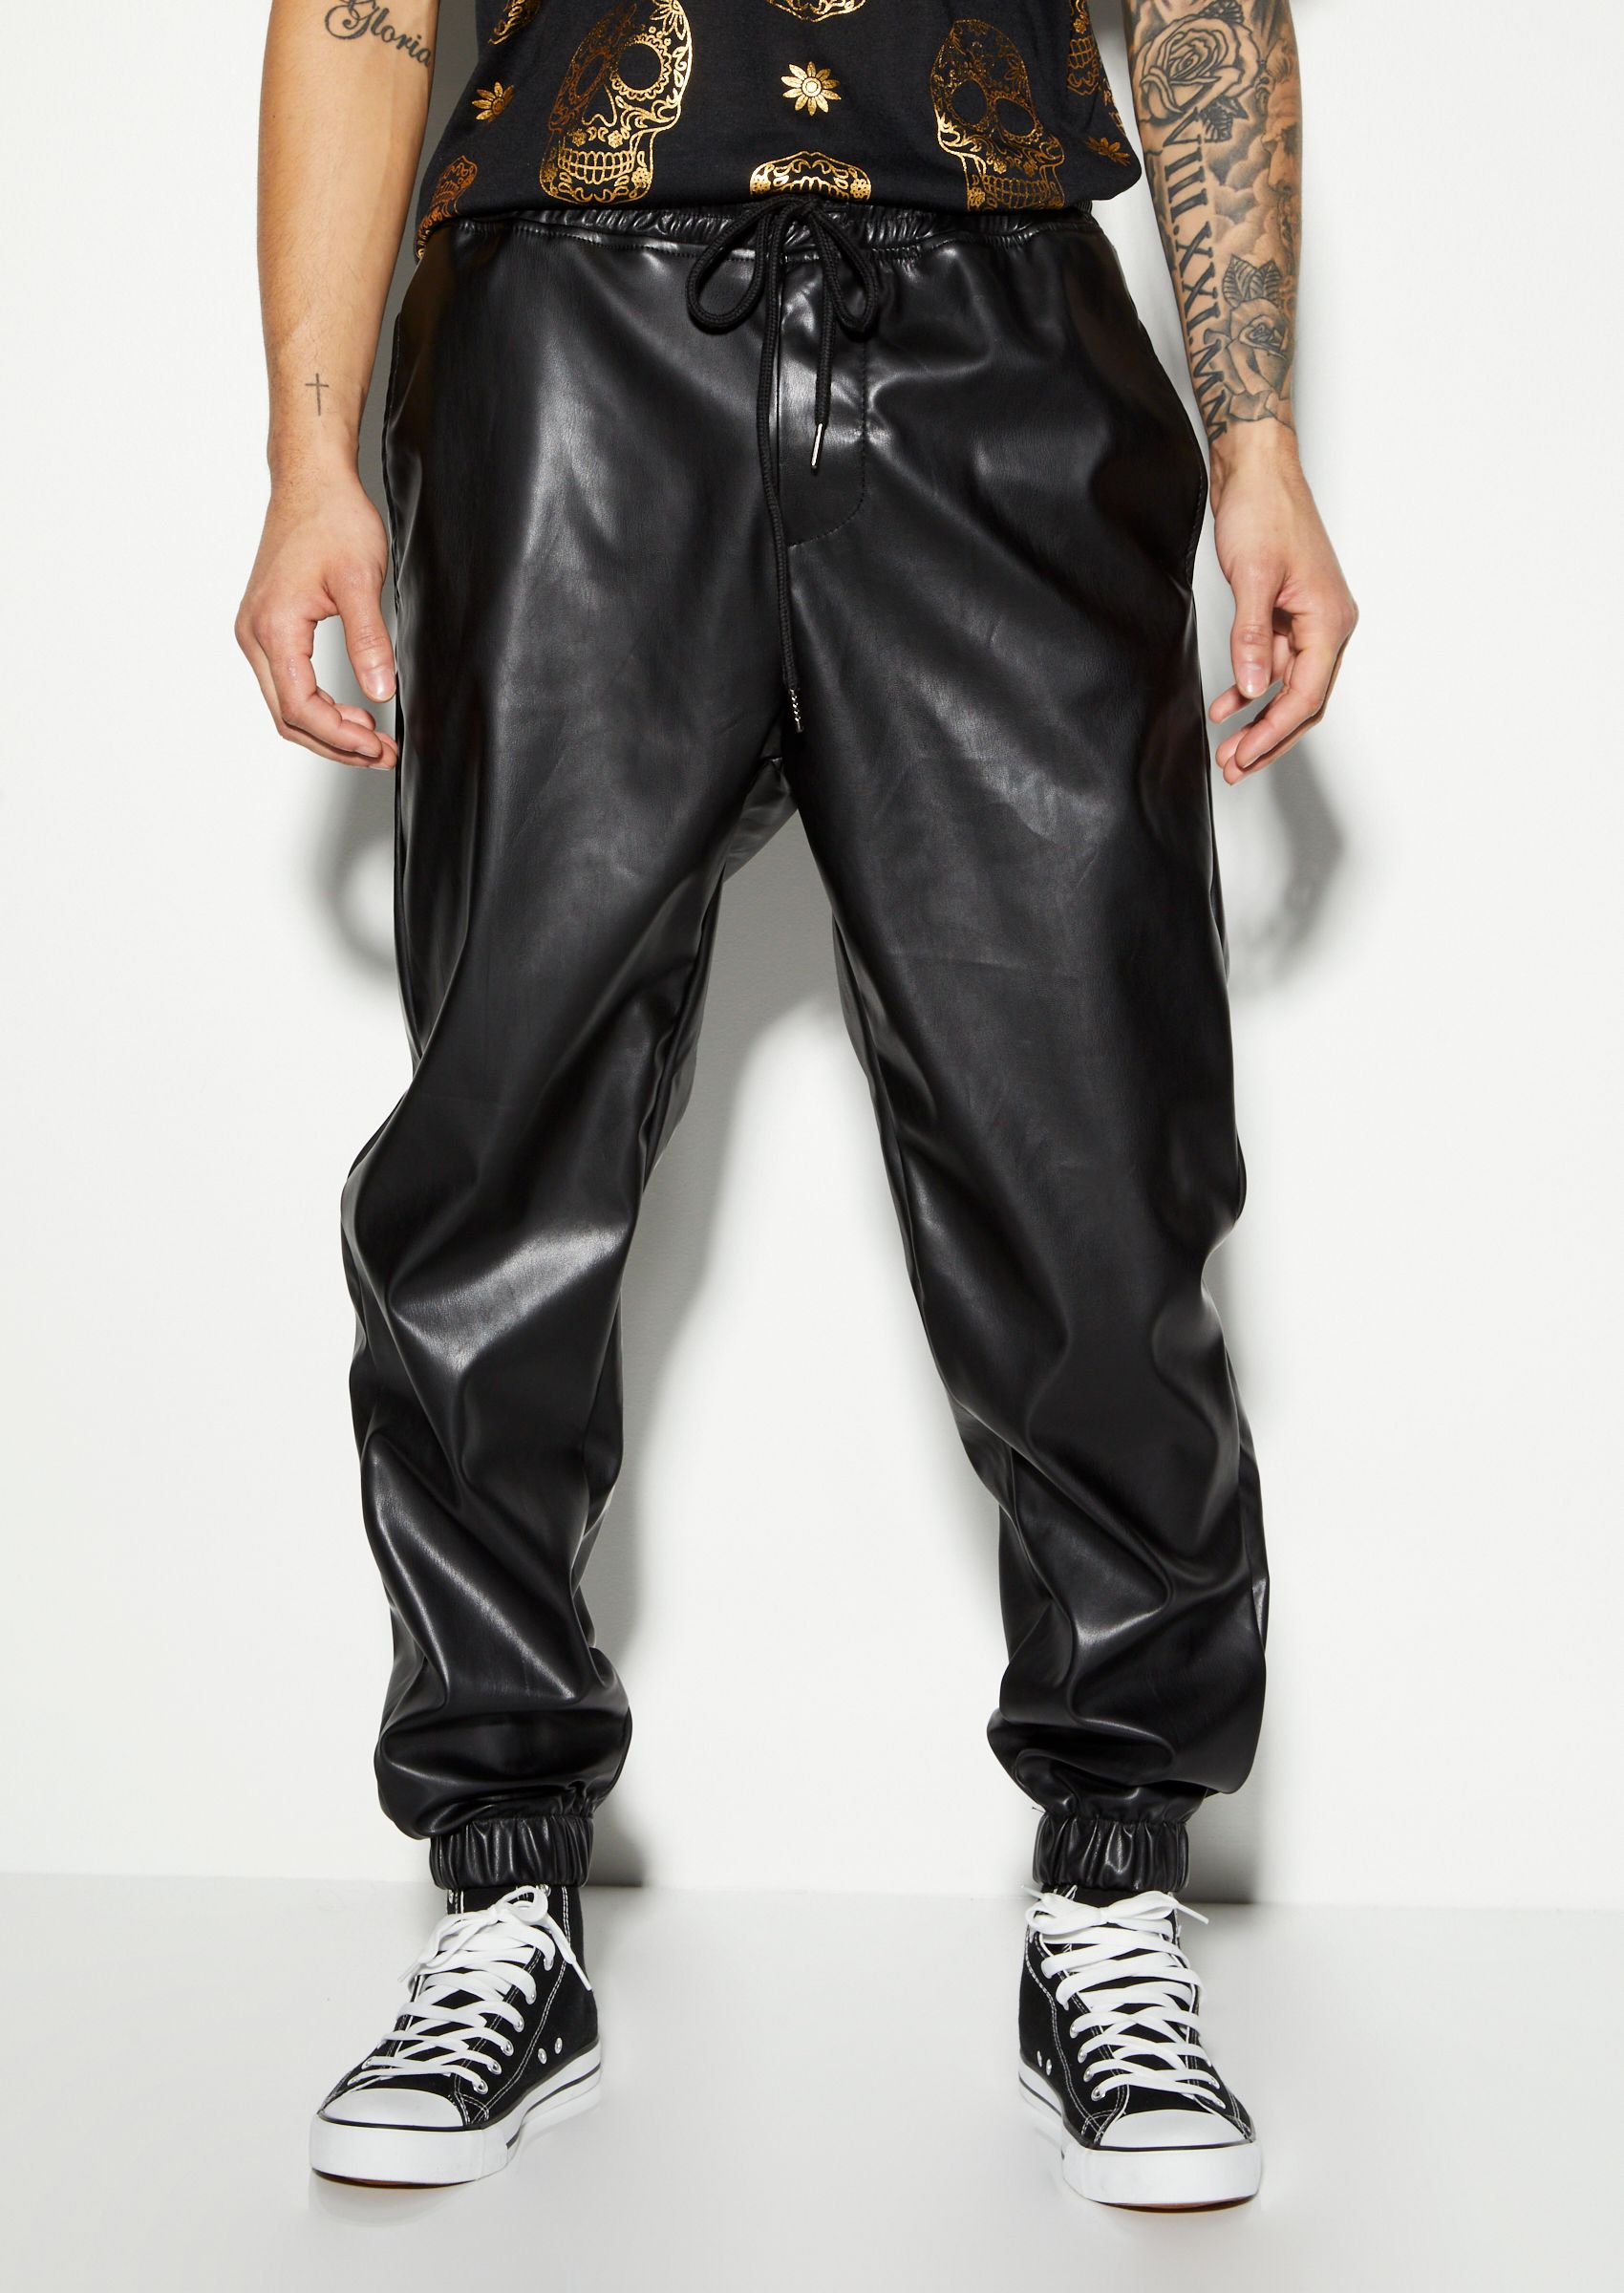 Buy Black Leather Harem Pants-S Online in Kuwait, Best Price at Blink|  Blink Kuwait